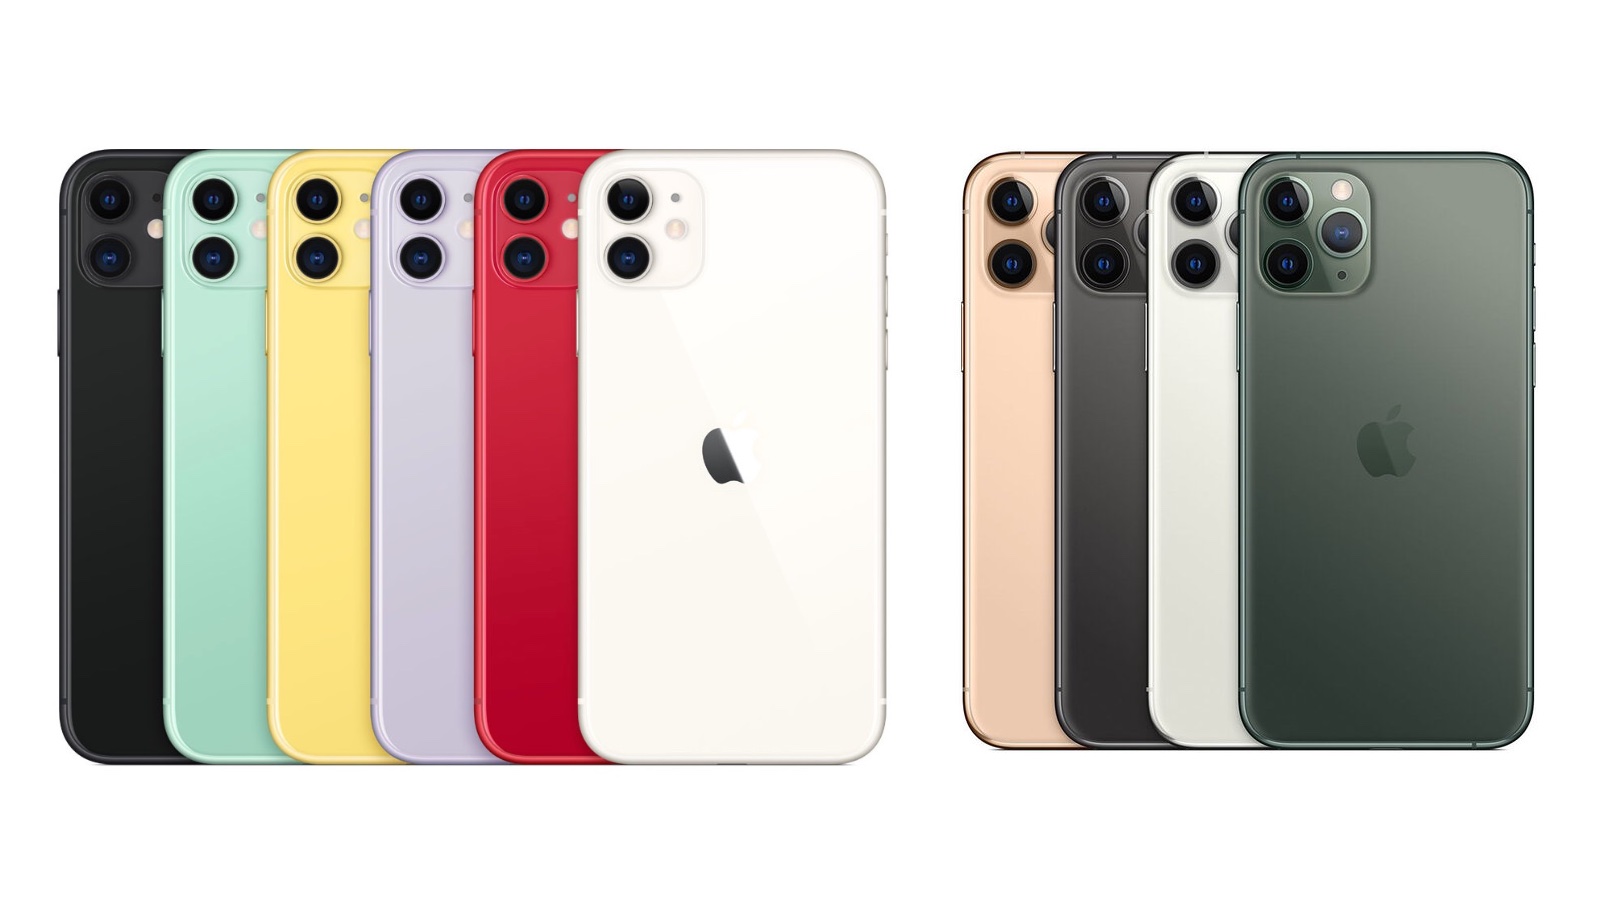 Iphone pro colors. Iphone 11 Pro. Iphone 11 Pro цвета корпуса. Apple iphone 11 Colors. Apple iphone 11 цвета.